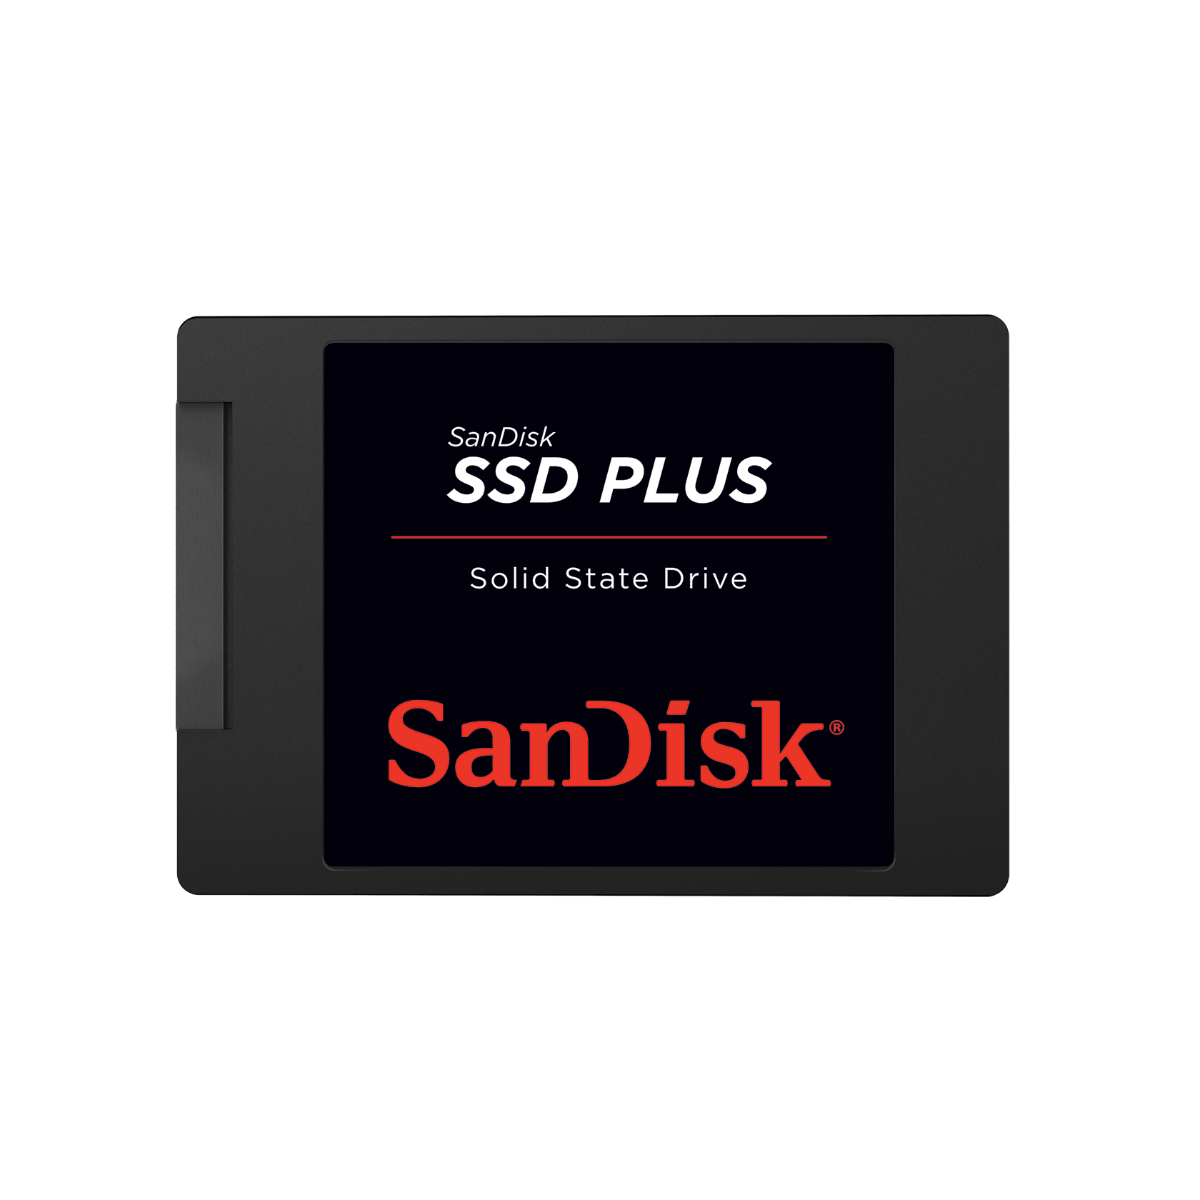 SanDisk  SSS